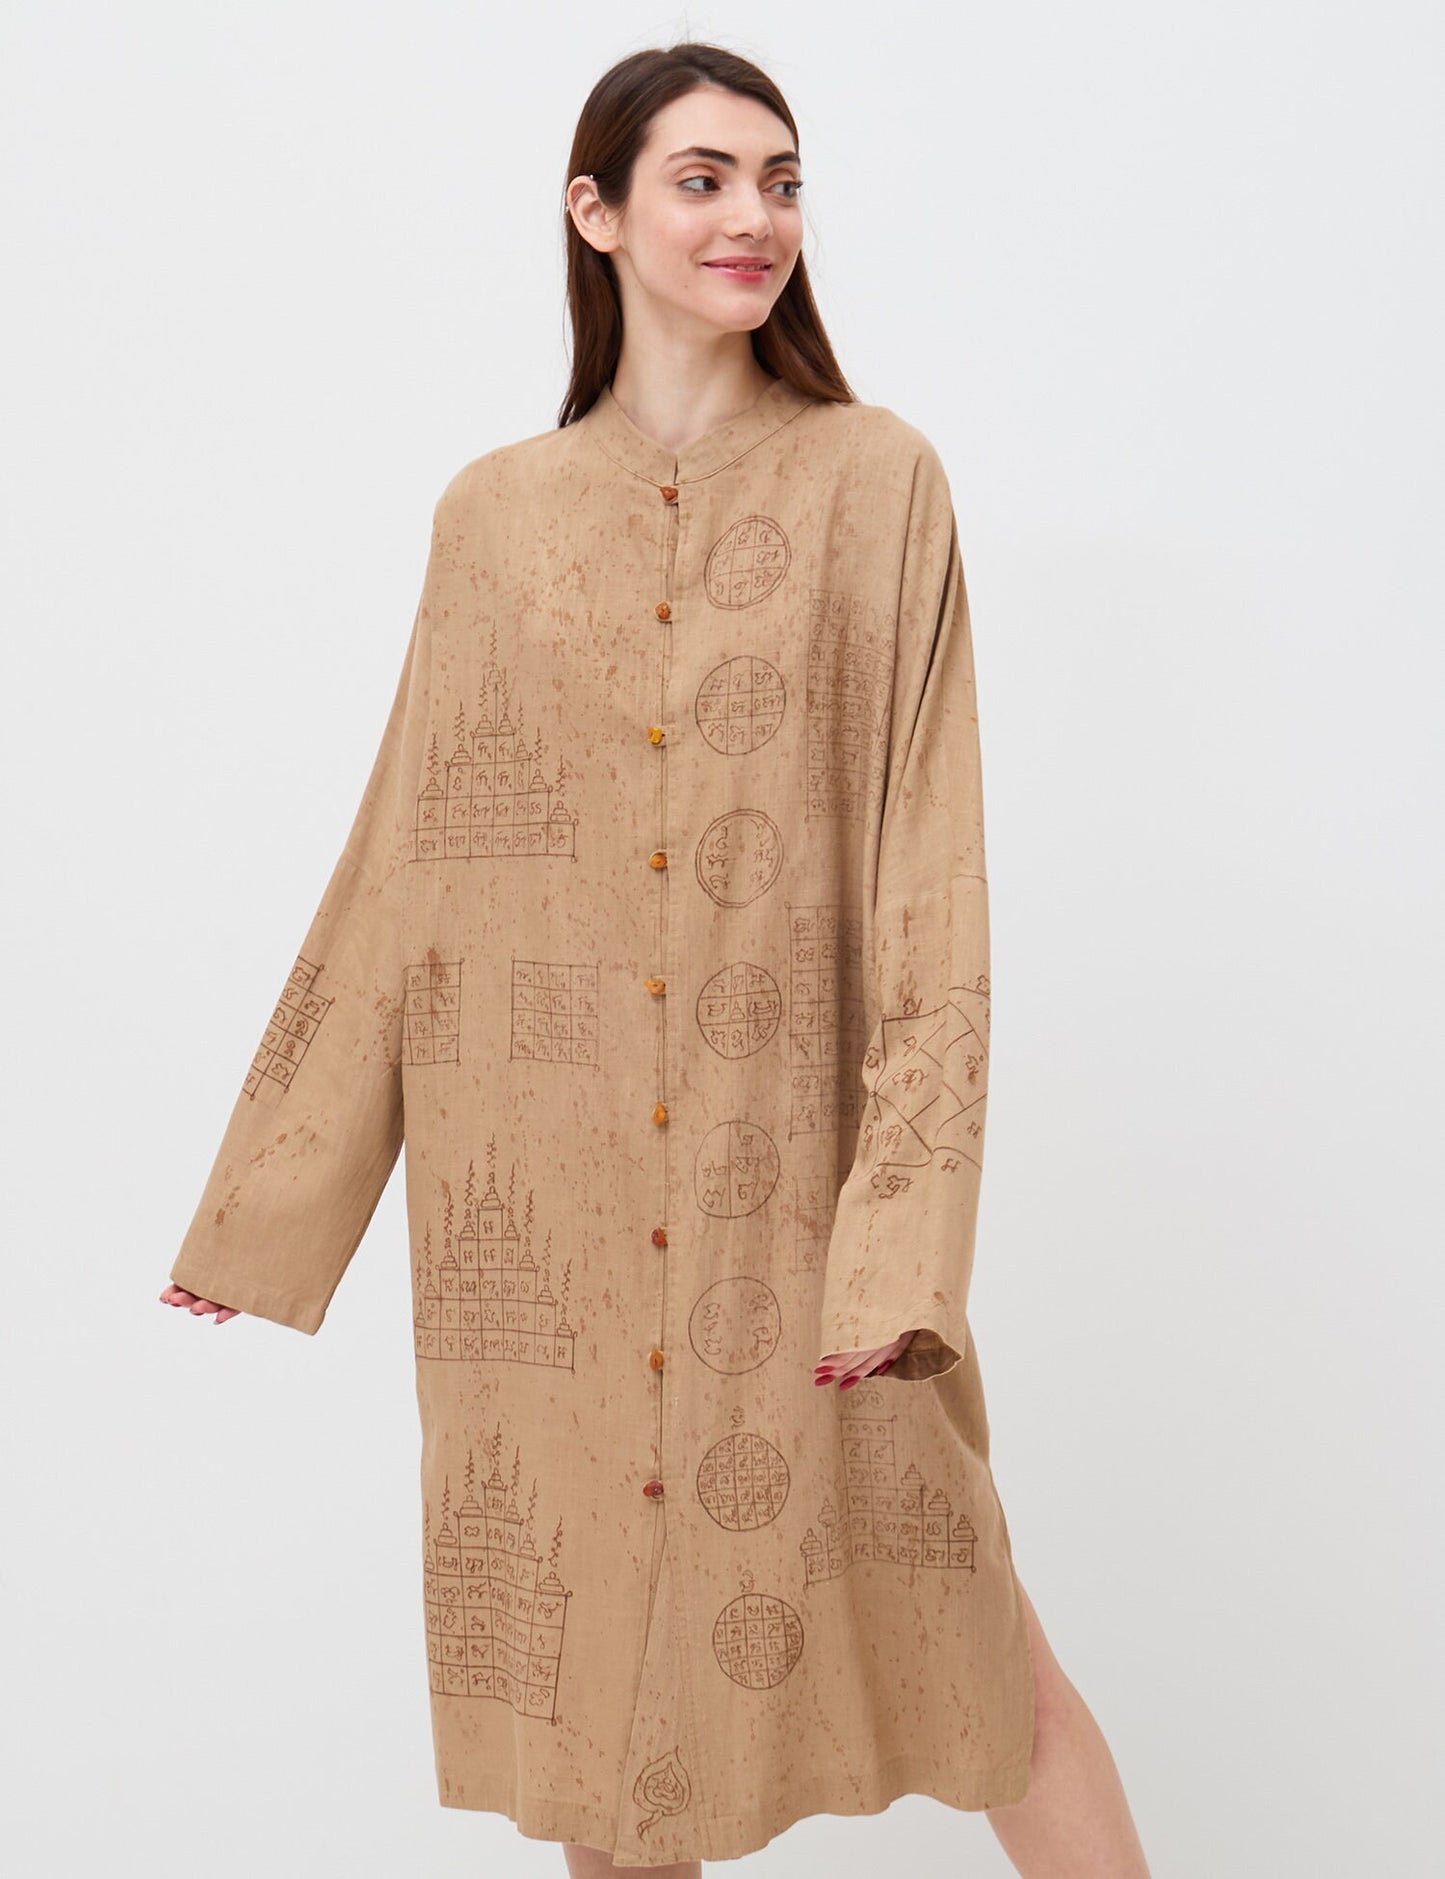 Handmade linen tunic